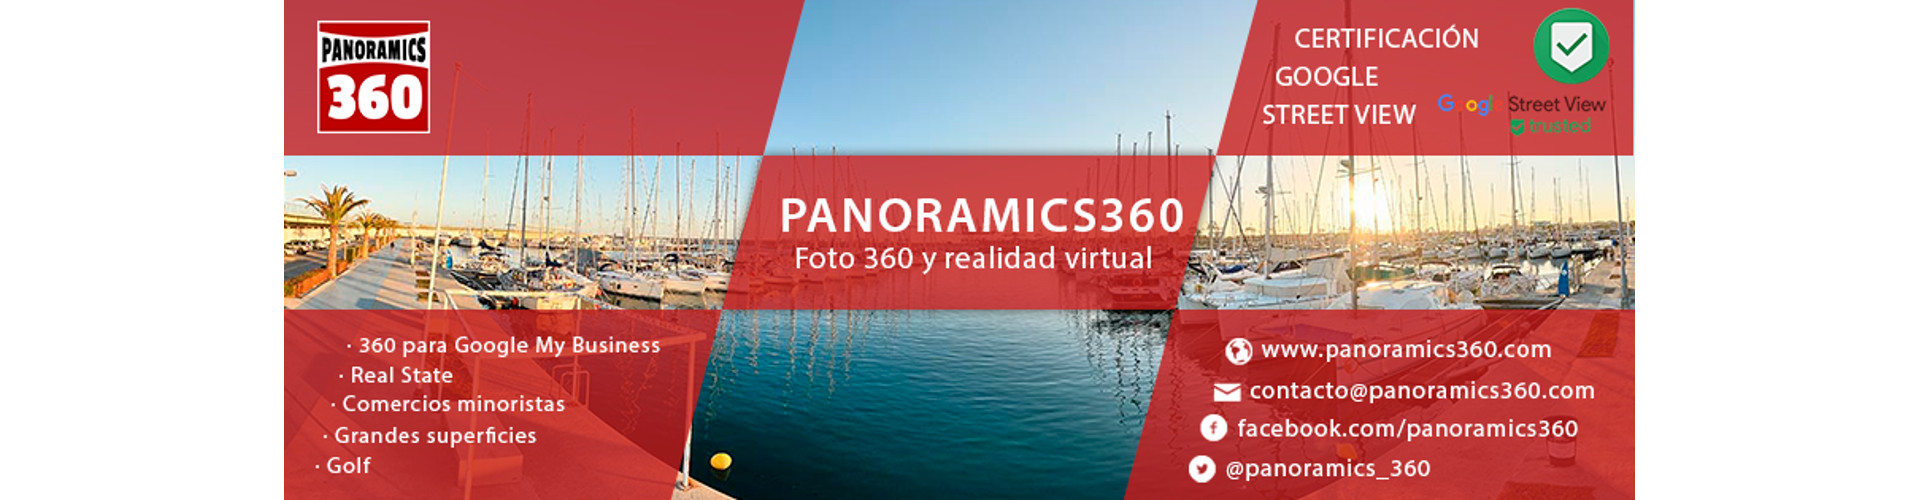 Portada Panoramics 360 realidad virtual